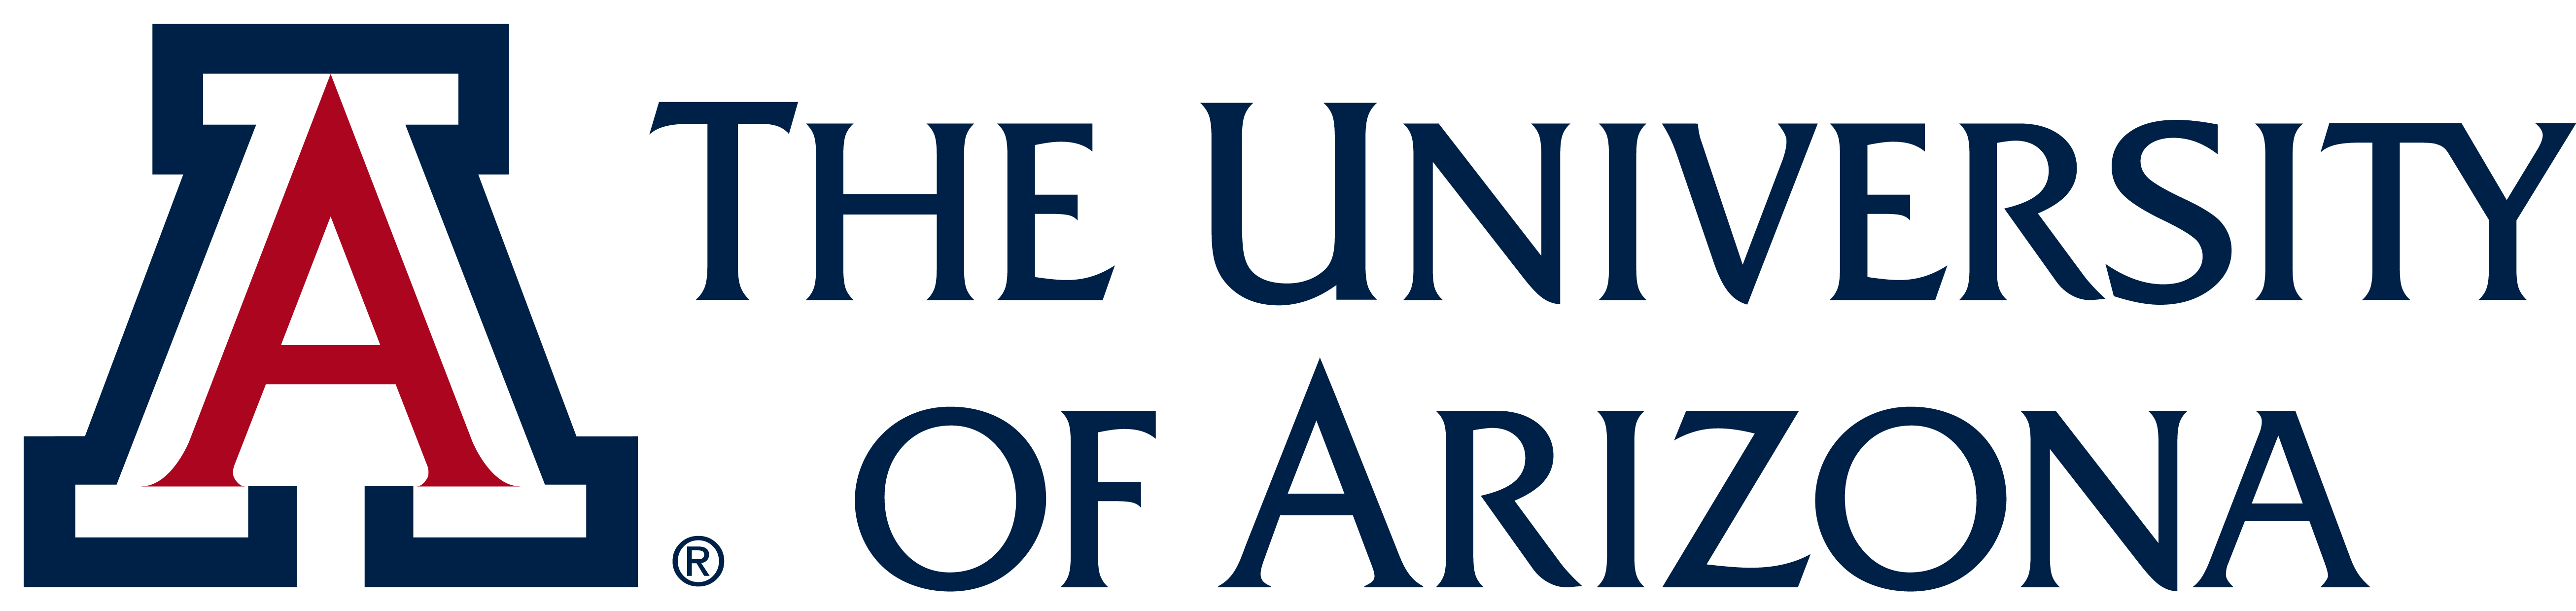 Image result for university of arizona